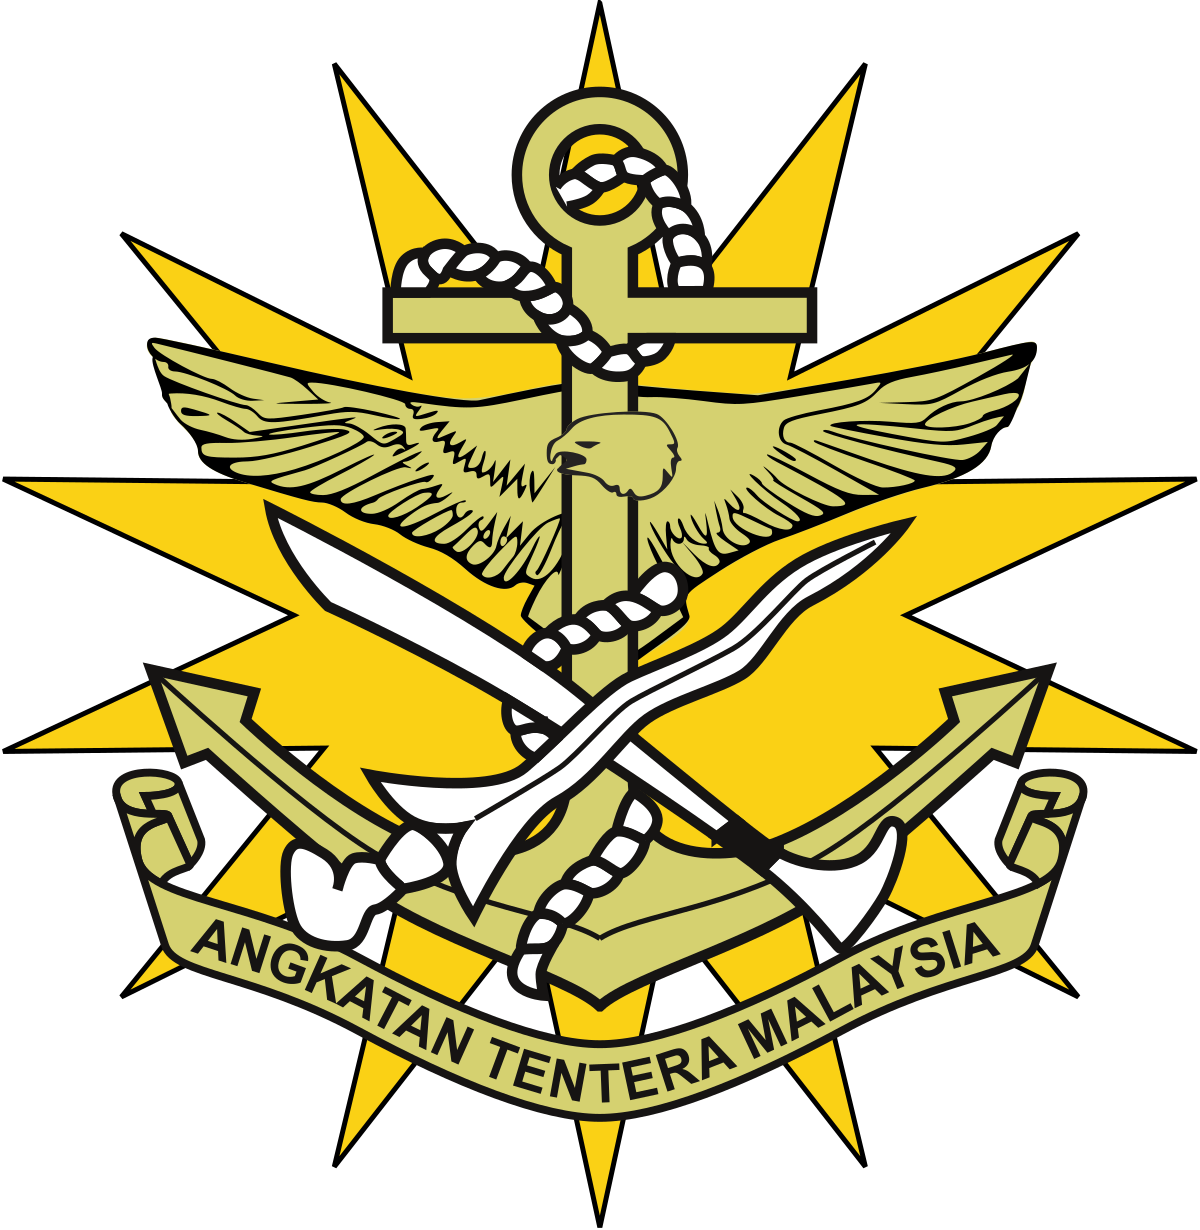 Angkatan tentera malaysia